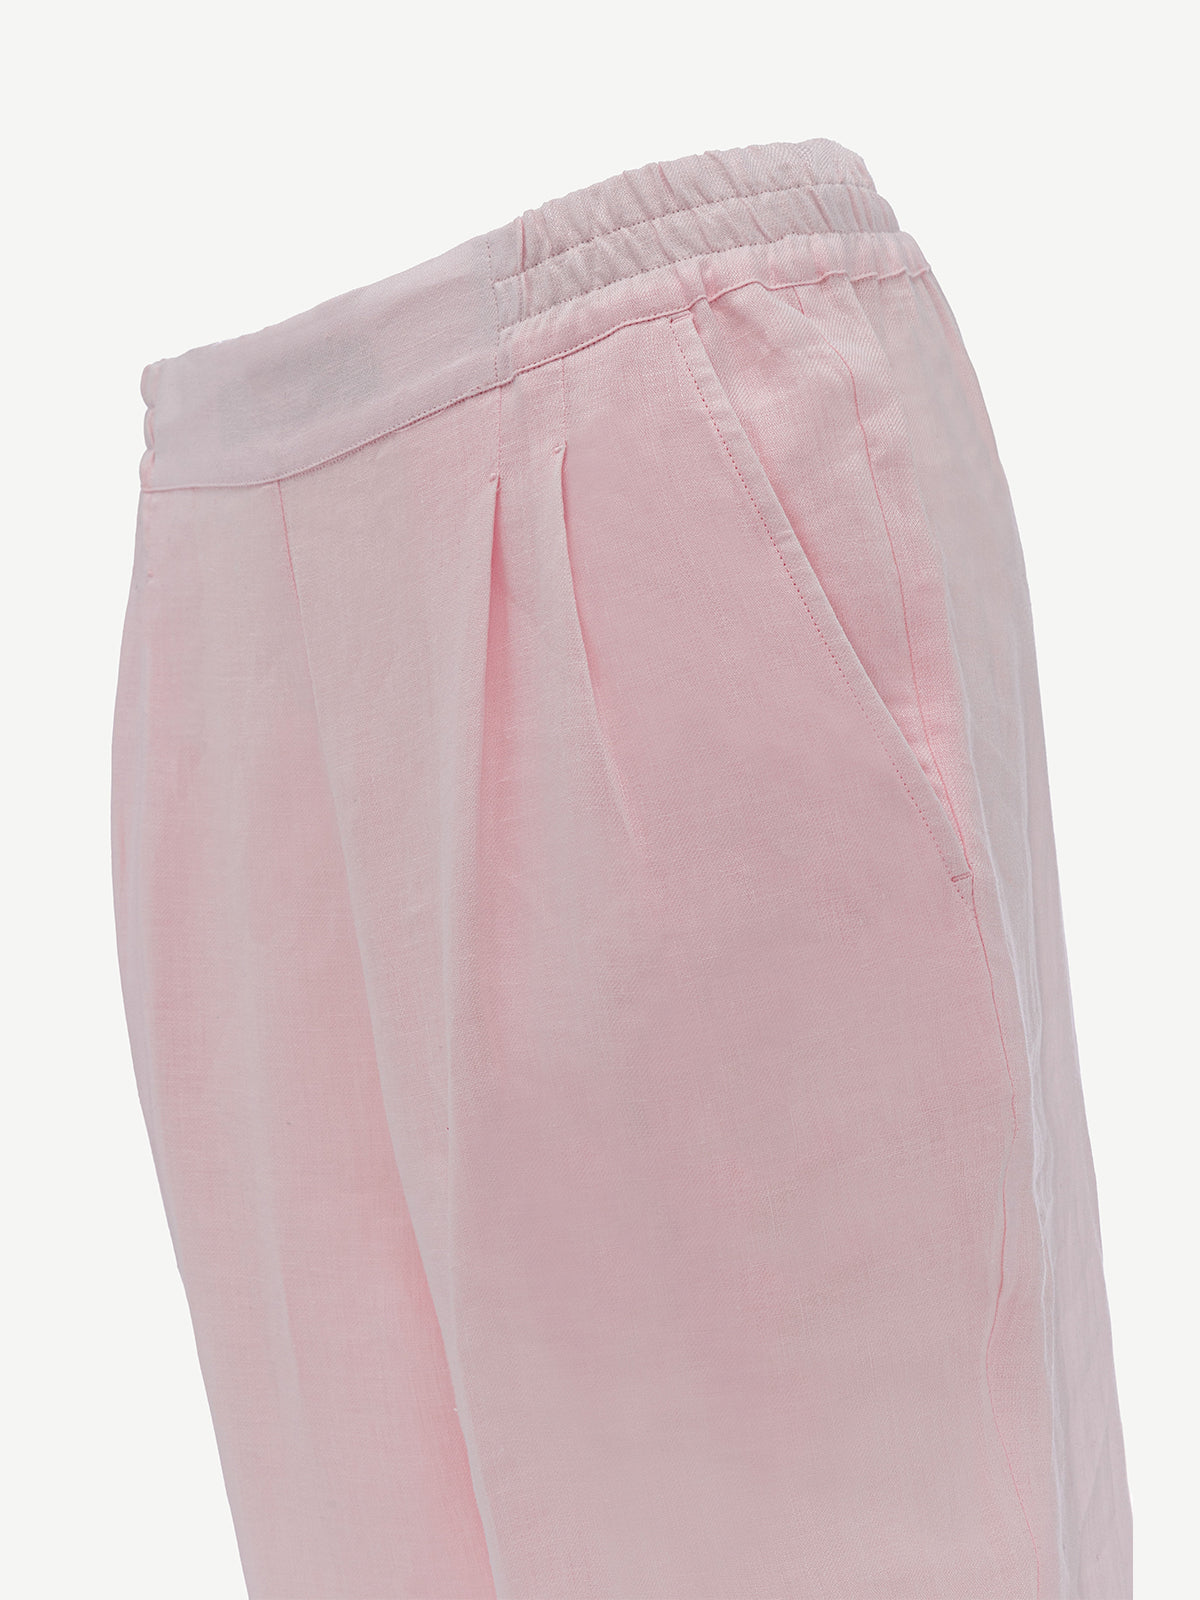 Miami Linen Pants for woman 100 % Capri linen pink pant detail